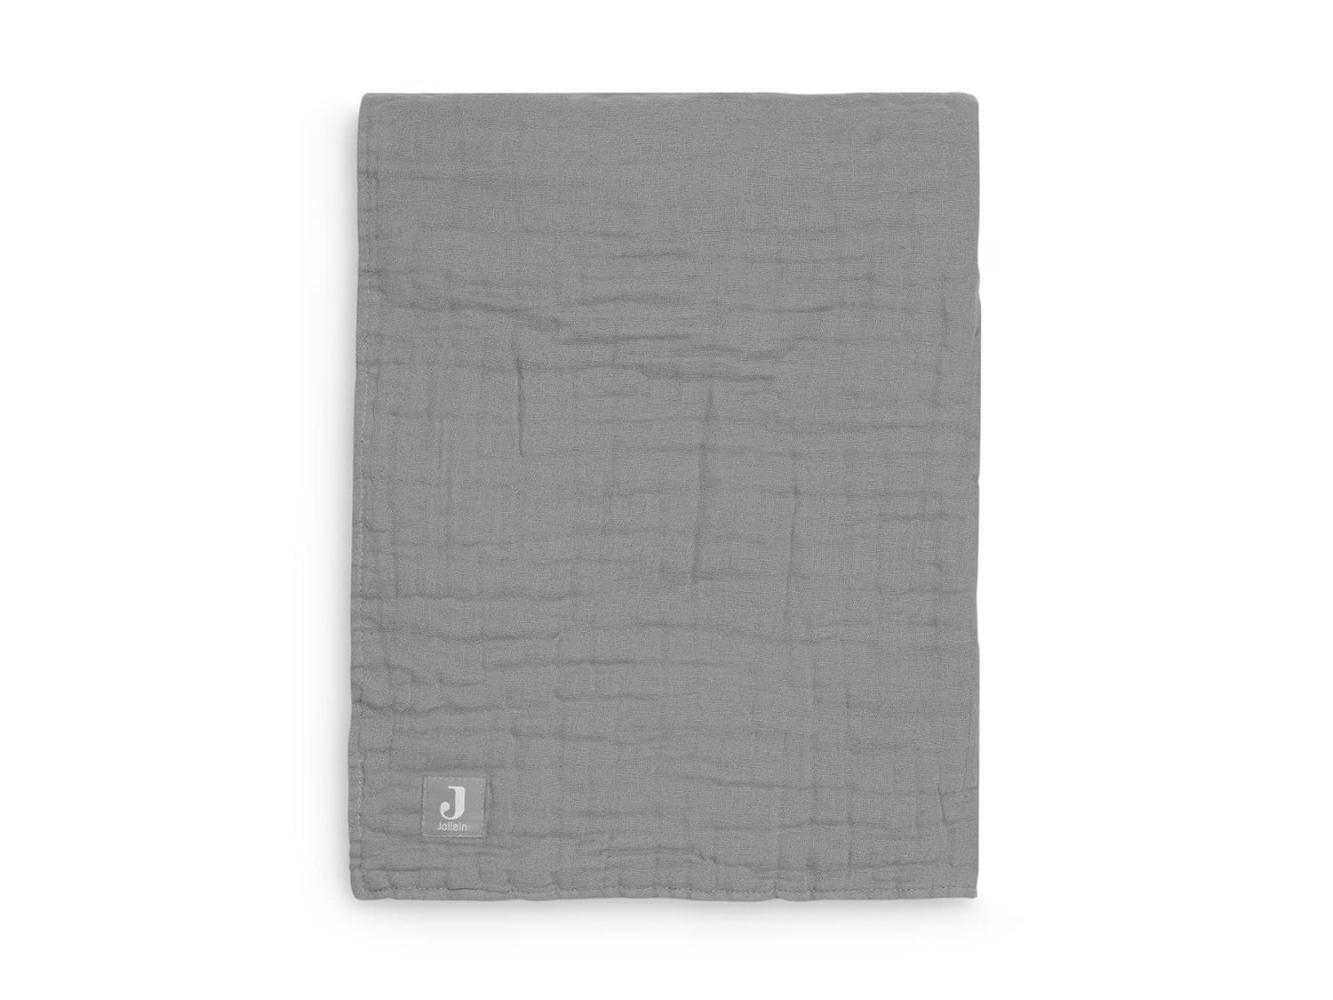 Jollein Wrinkled Decke Storm Grey 120 x 120 cm Grau Bild 1